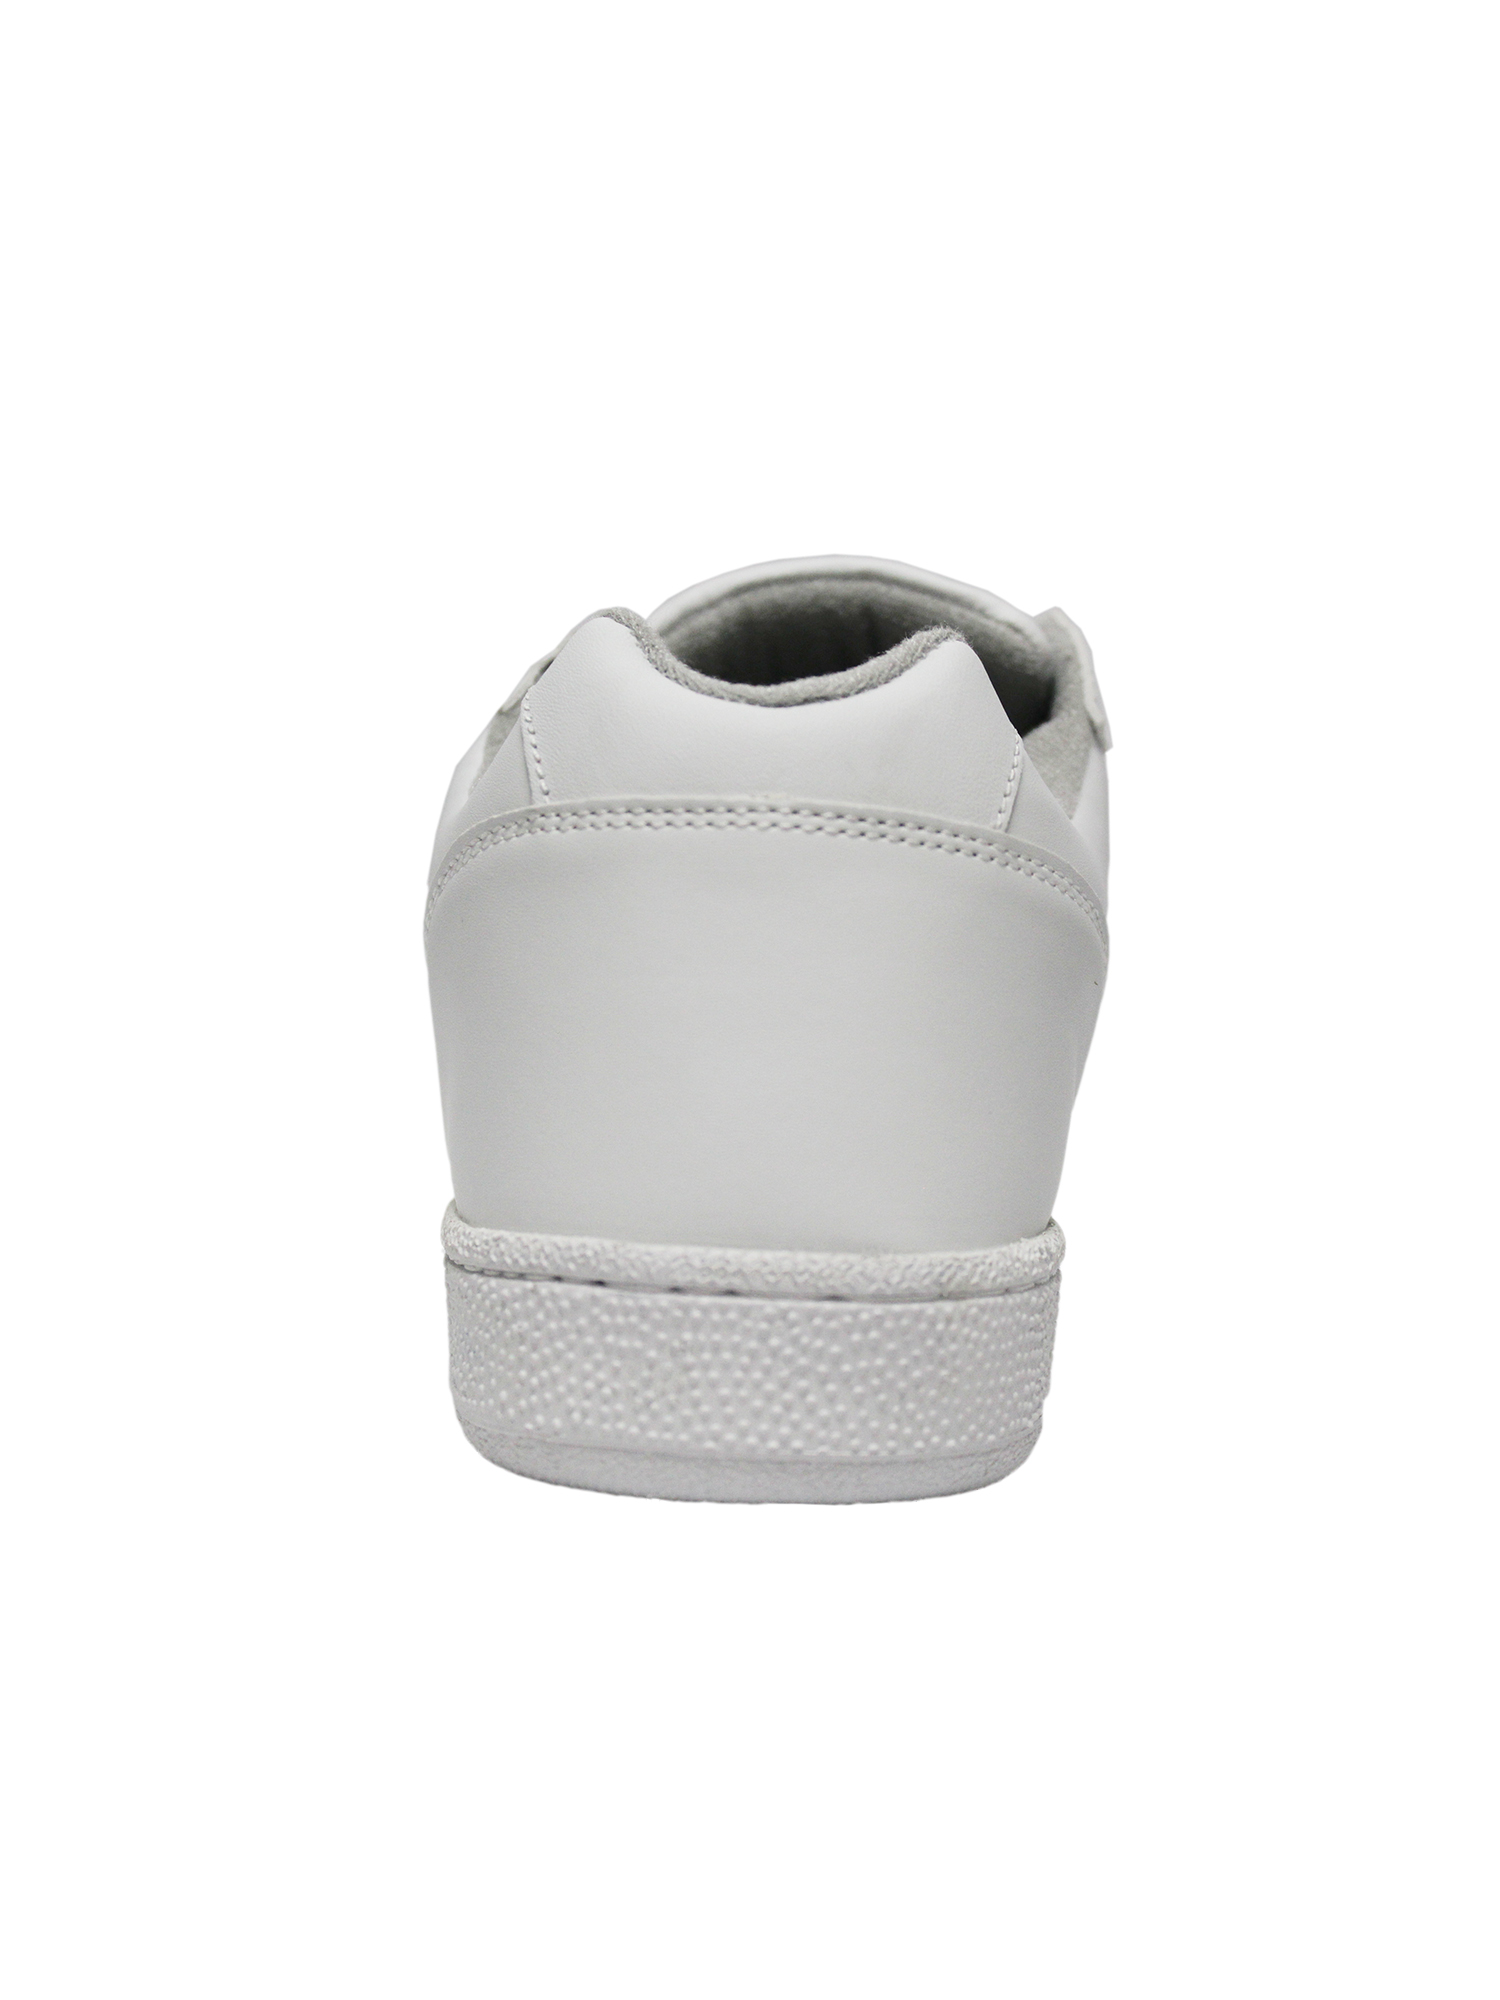 Tanleewa Men's Leather Strap Sneakers Lightweight Hook and Loop Walking Shoe Size 9.5 Adult Male - image 5 of 5